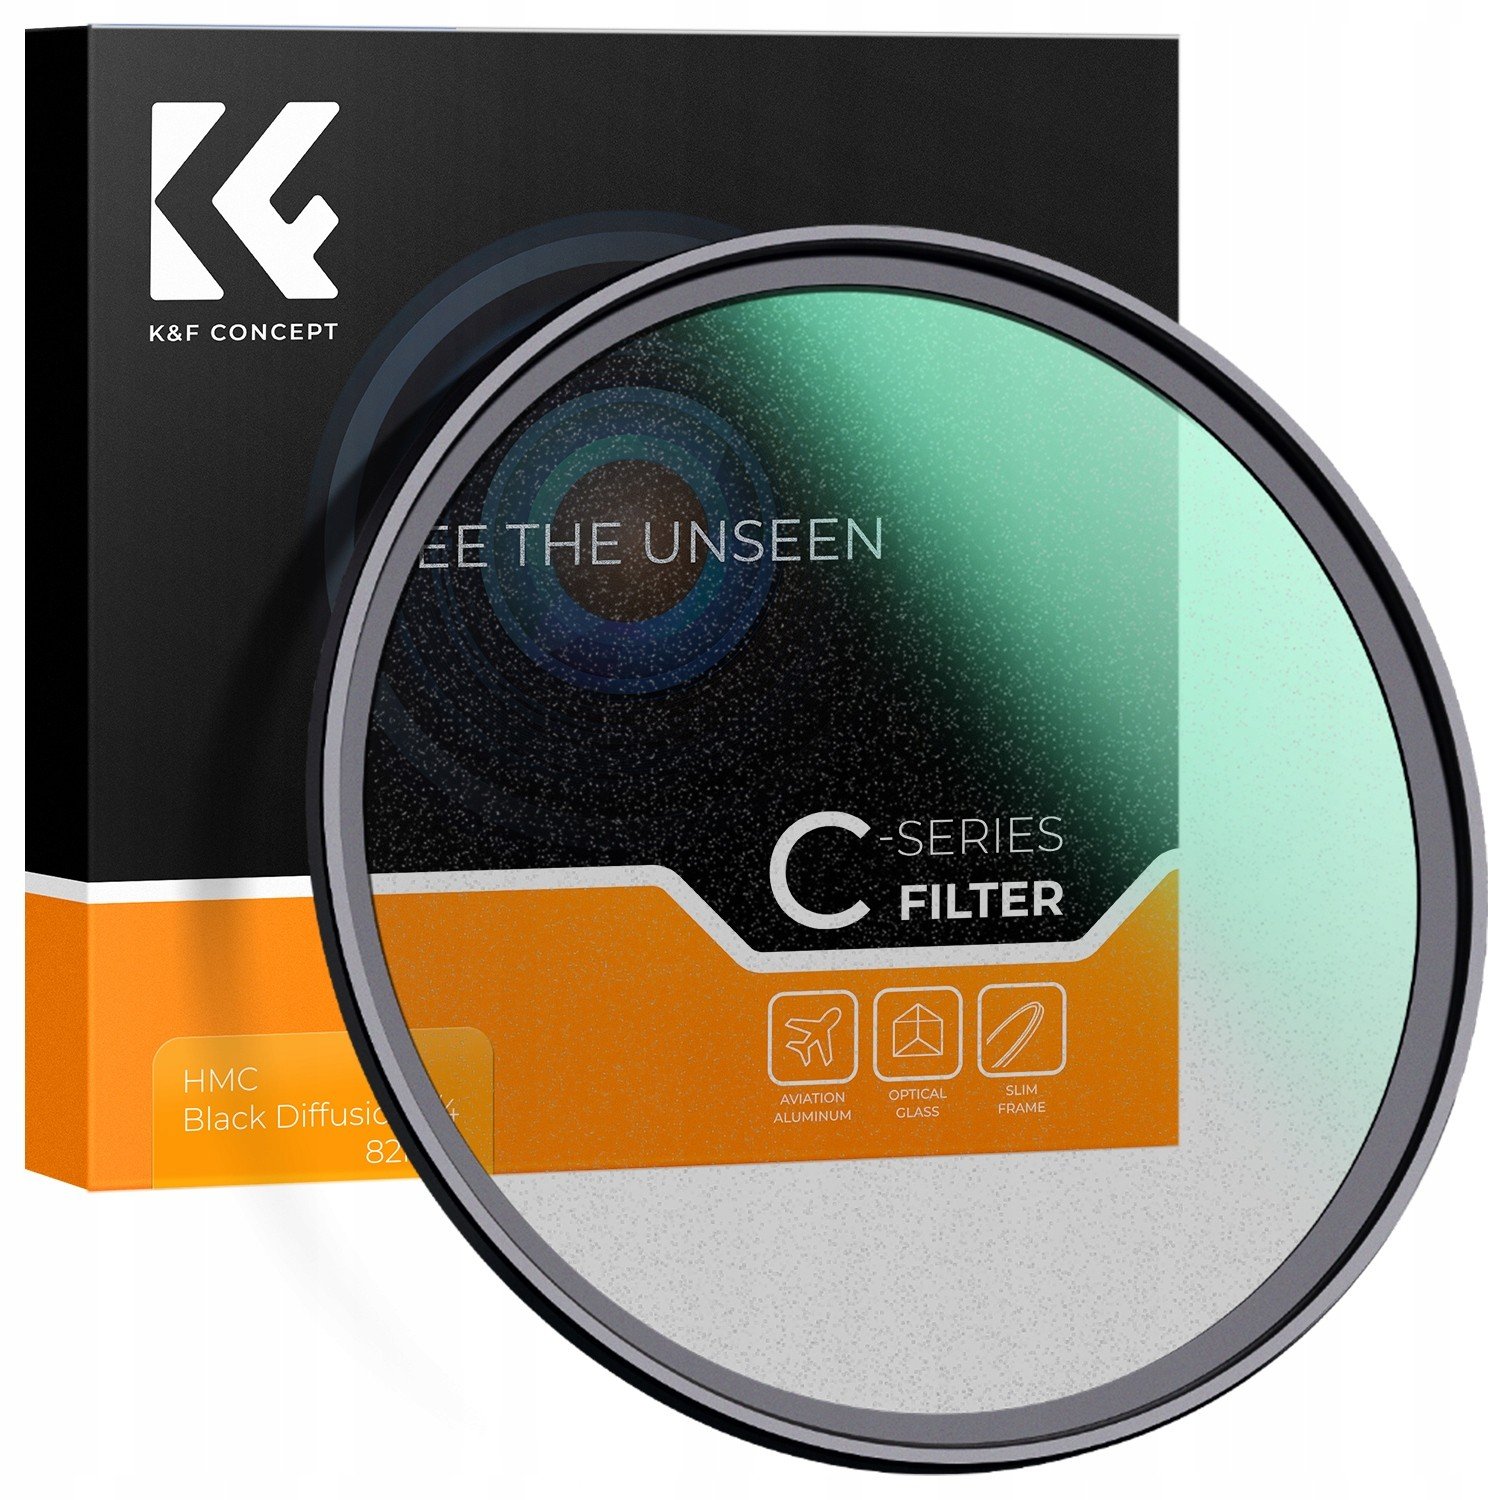 Difuzní filtr Black Mist 1/4 67mm Nano-C K&f